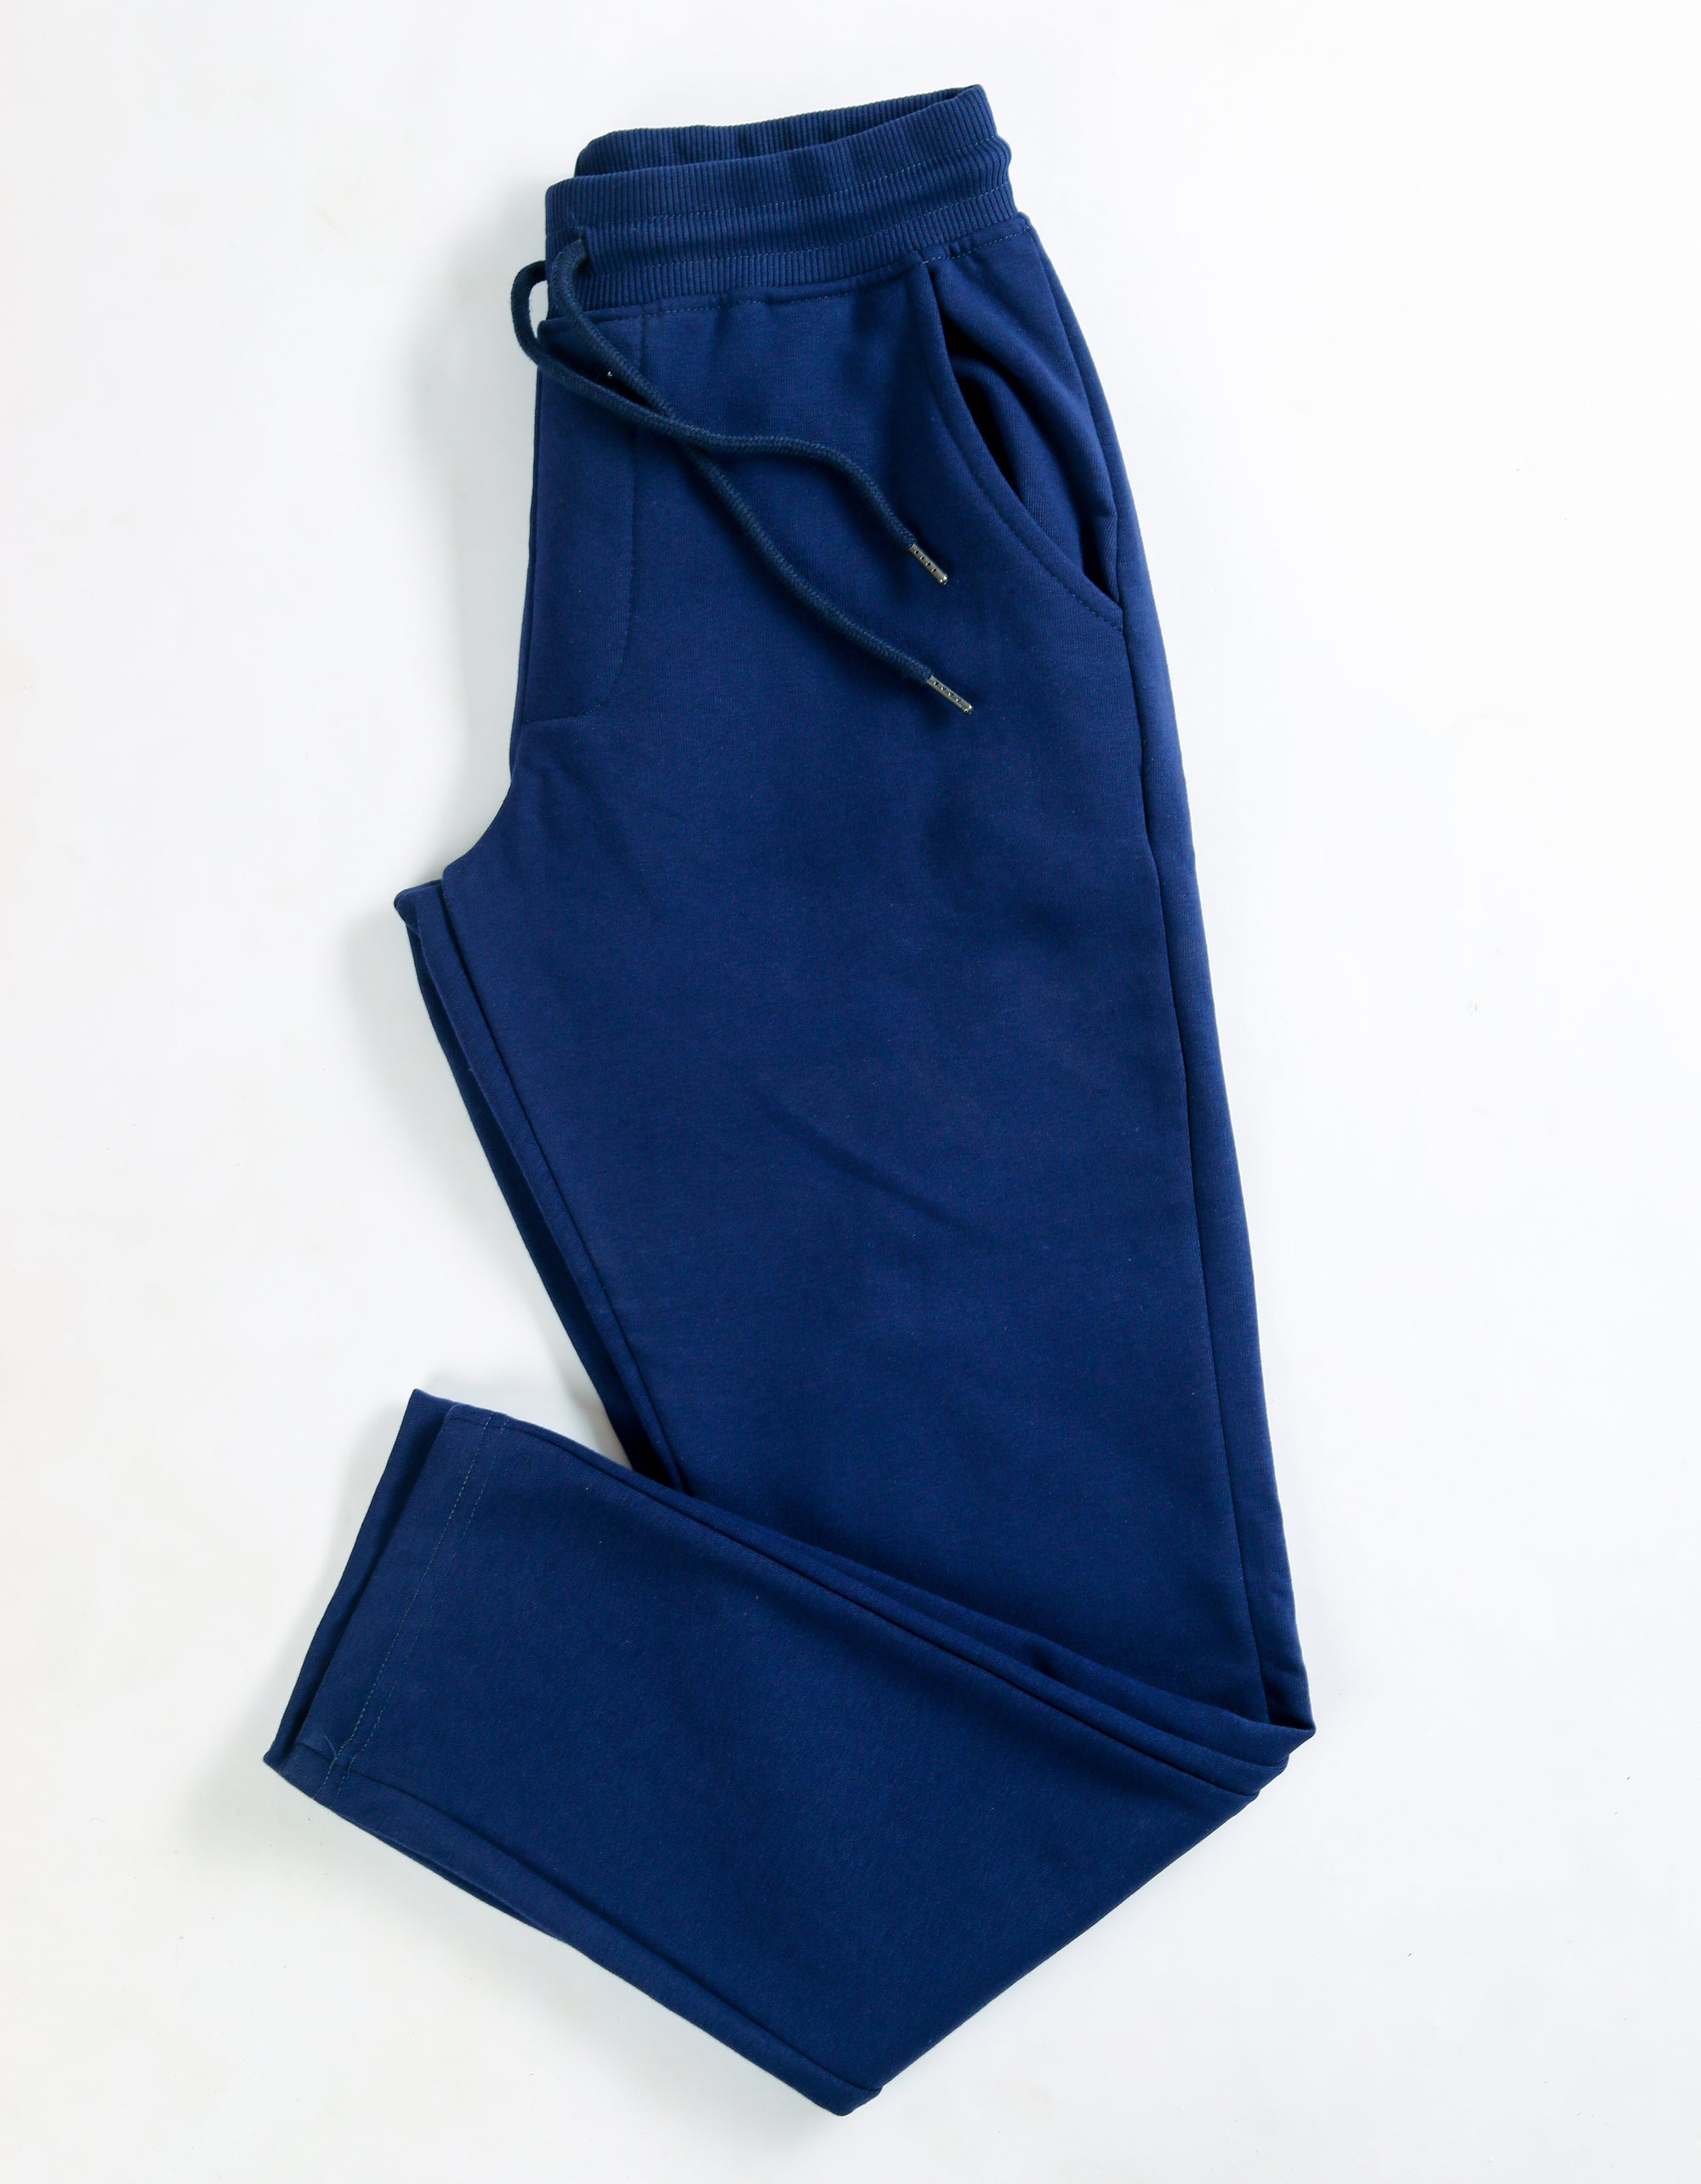 Plain Red Cotton Men's Sweatpants - Comfortable and Versatile Loungewear_ Navy